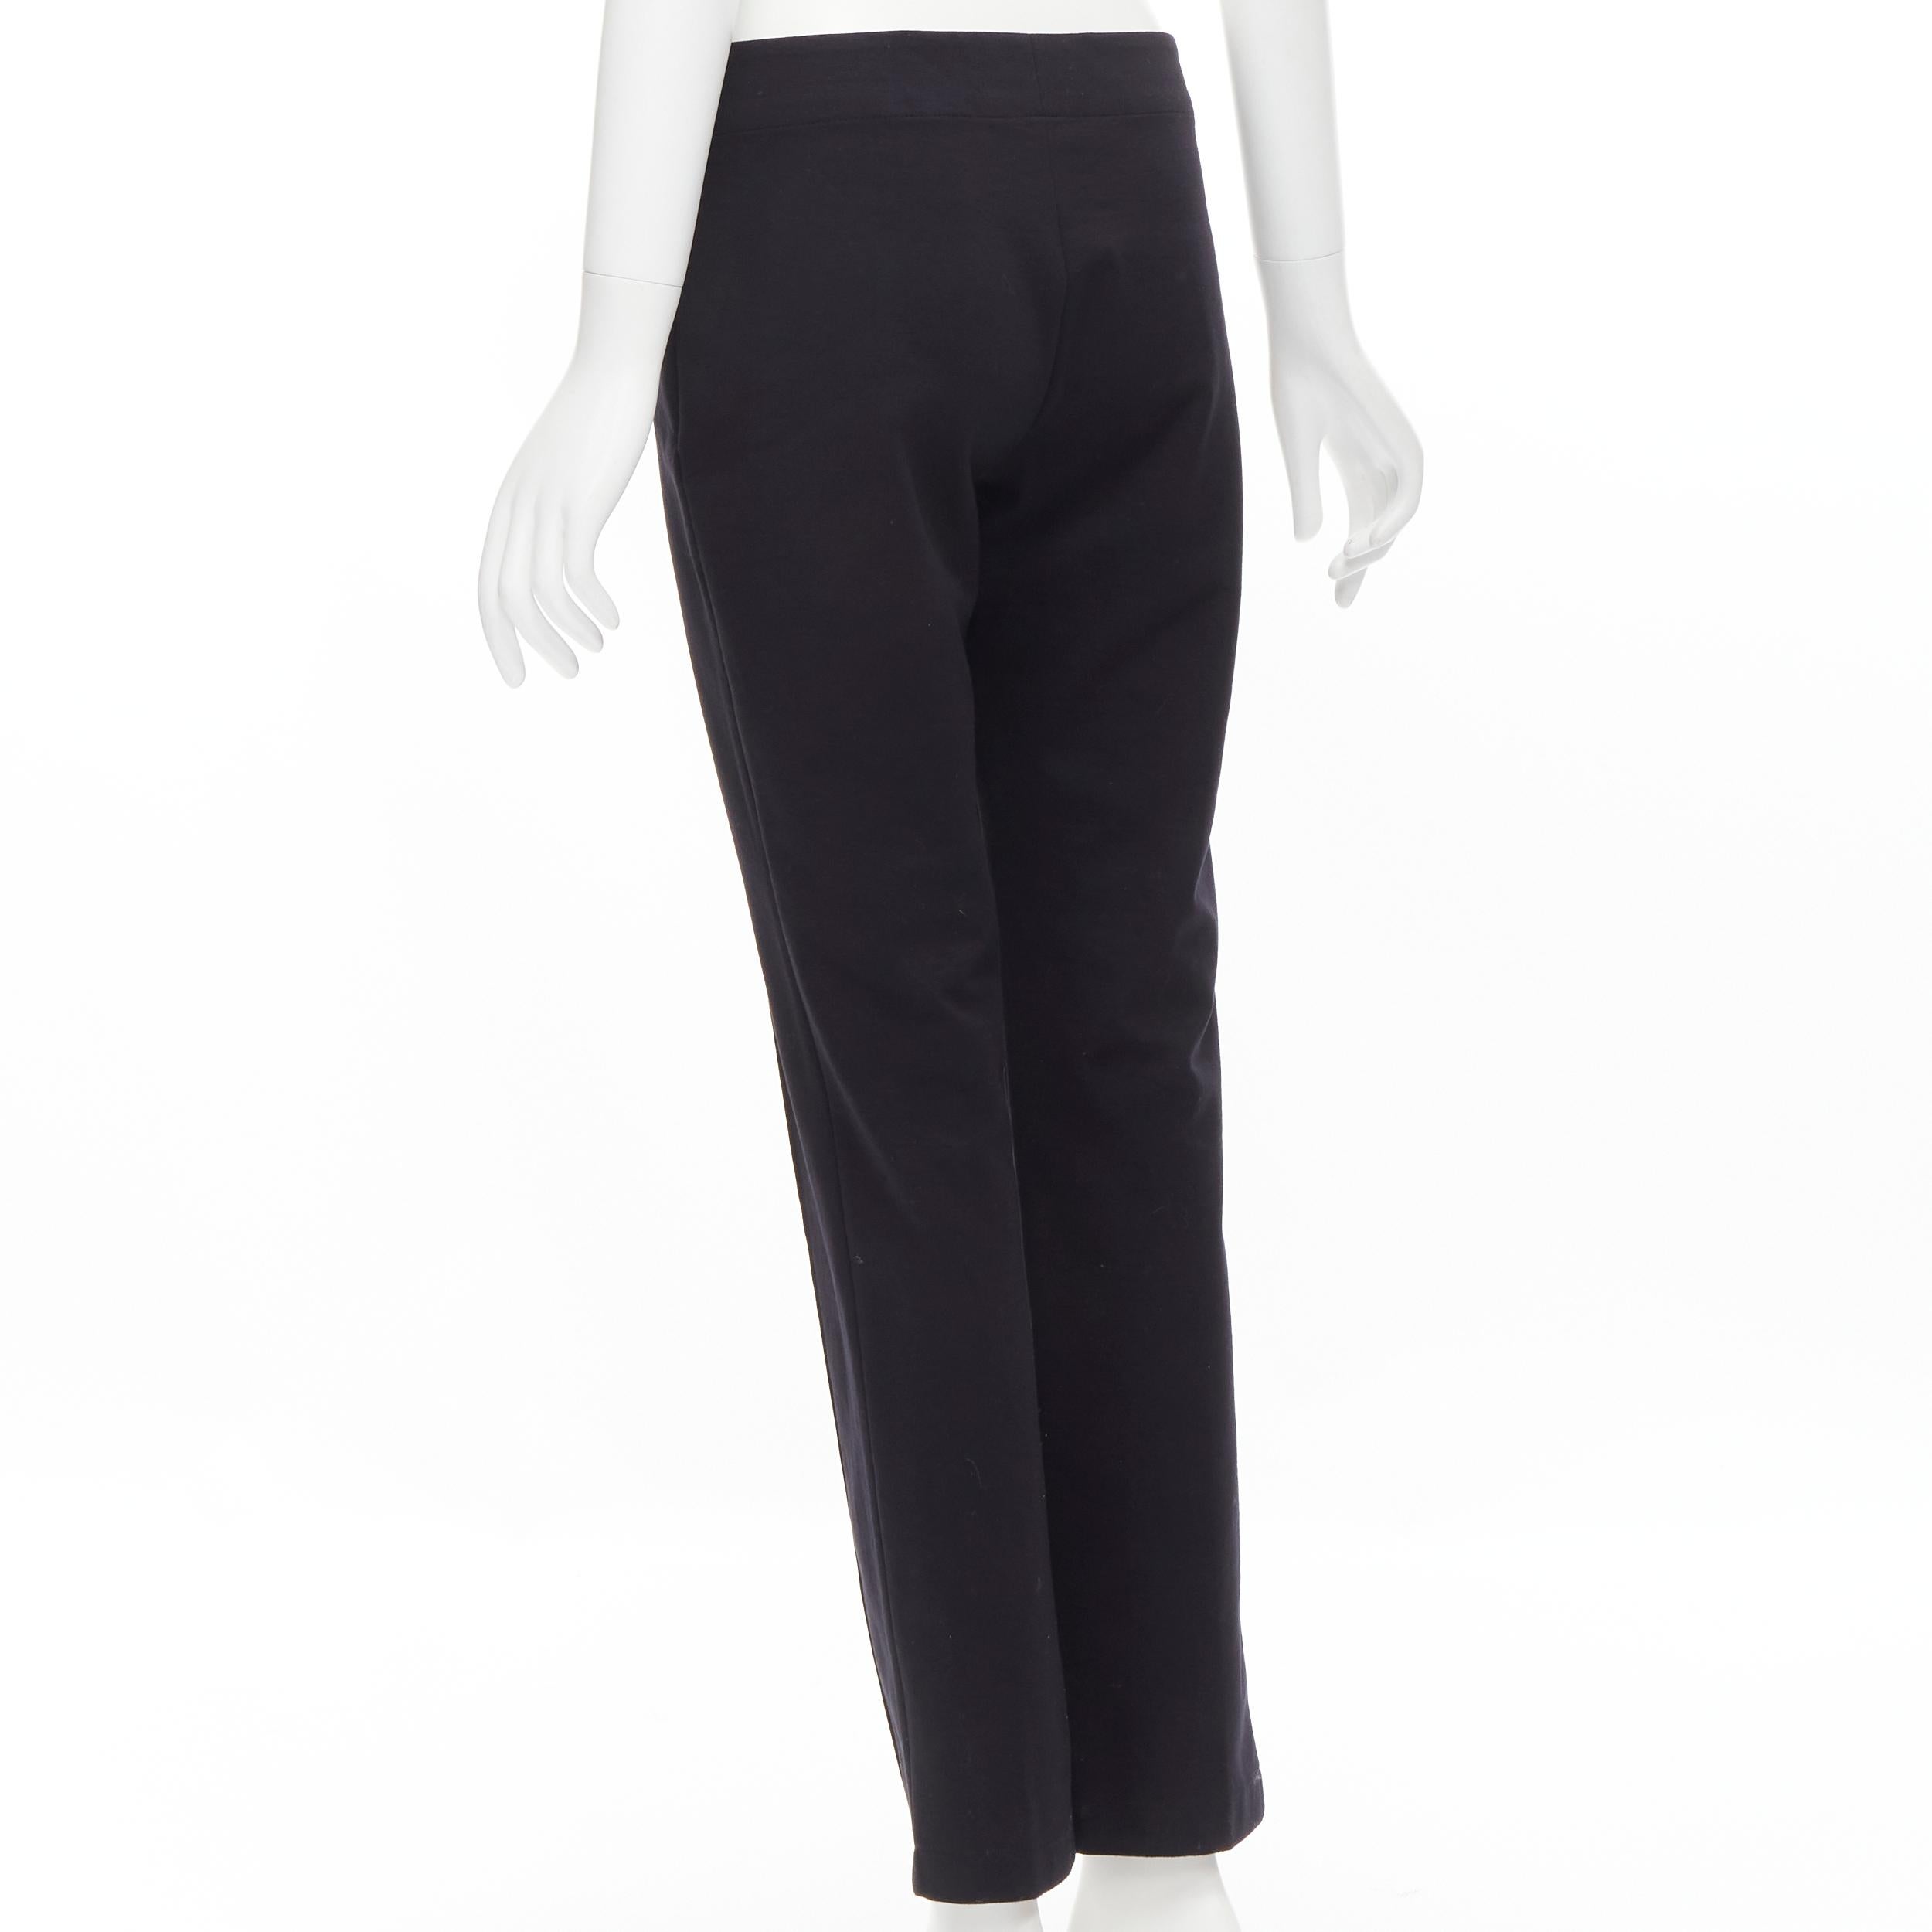 Black THE ROW black modal cotton dual gold zipper minimal legging pants XSXS For Sale